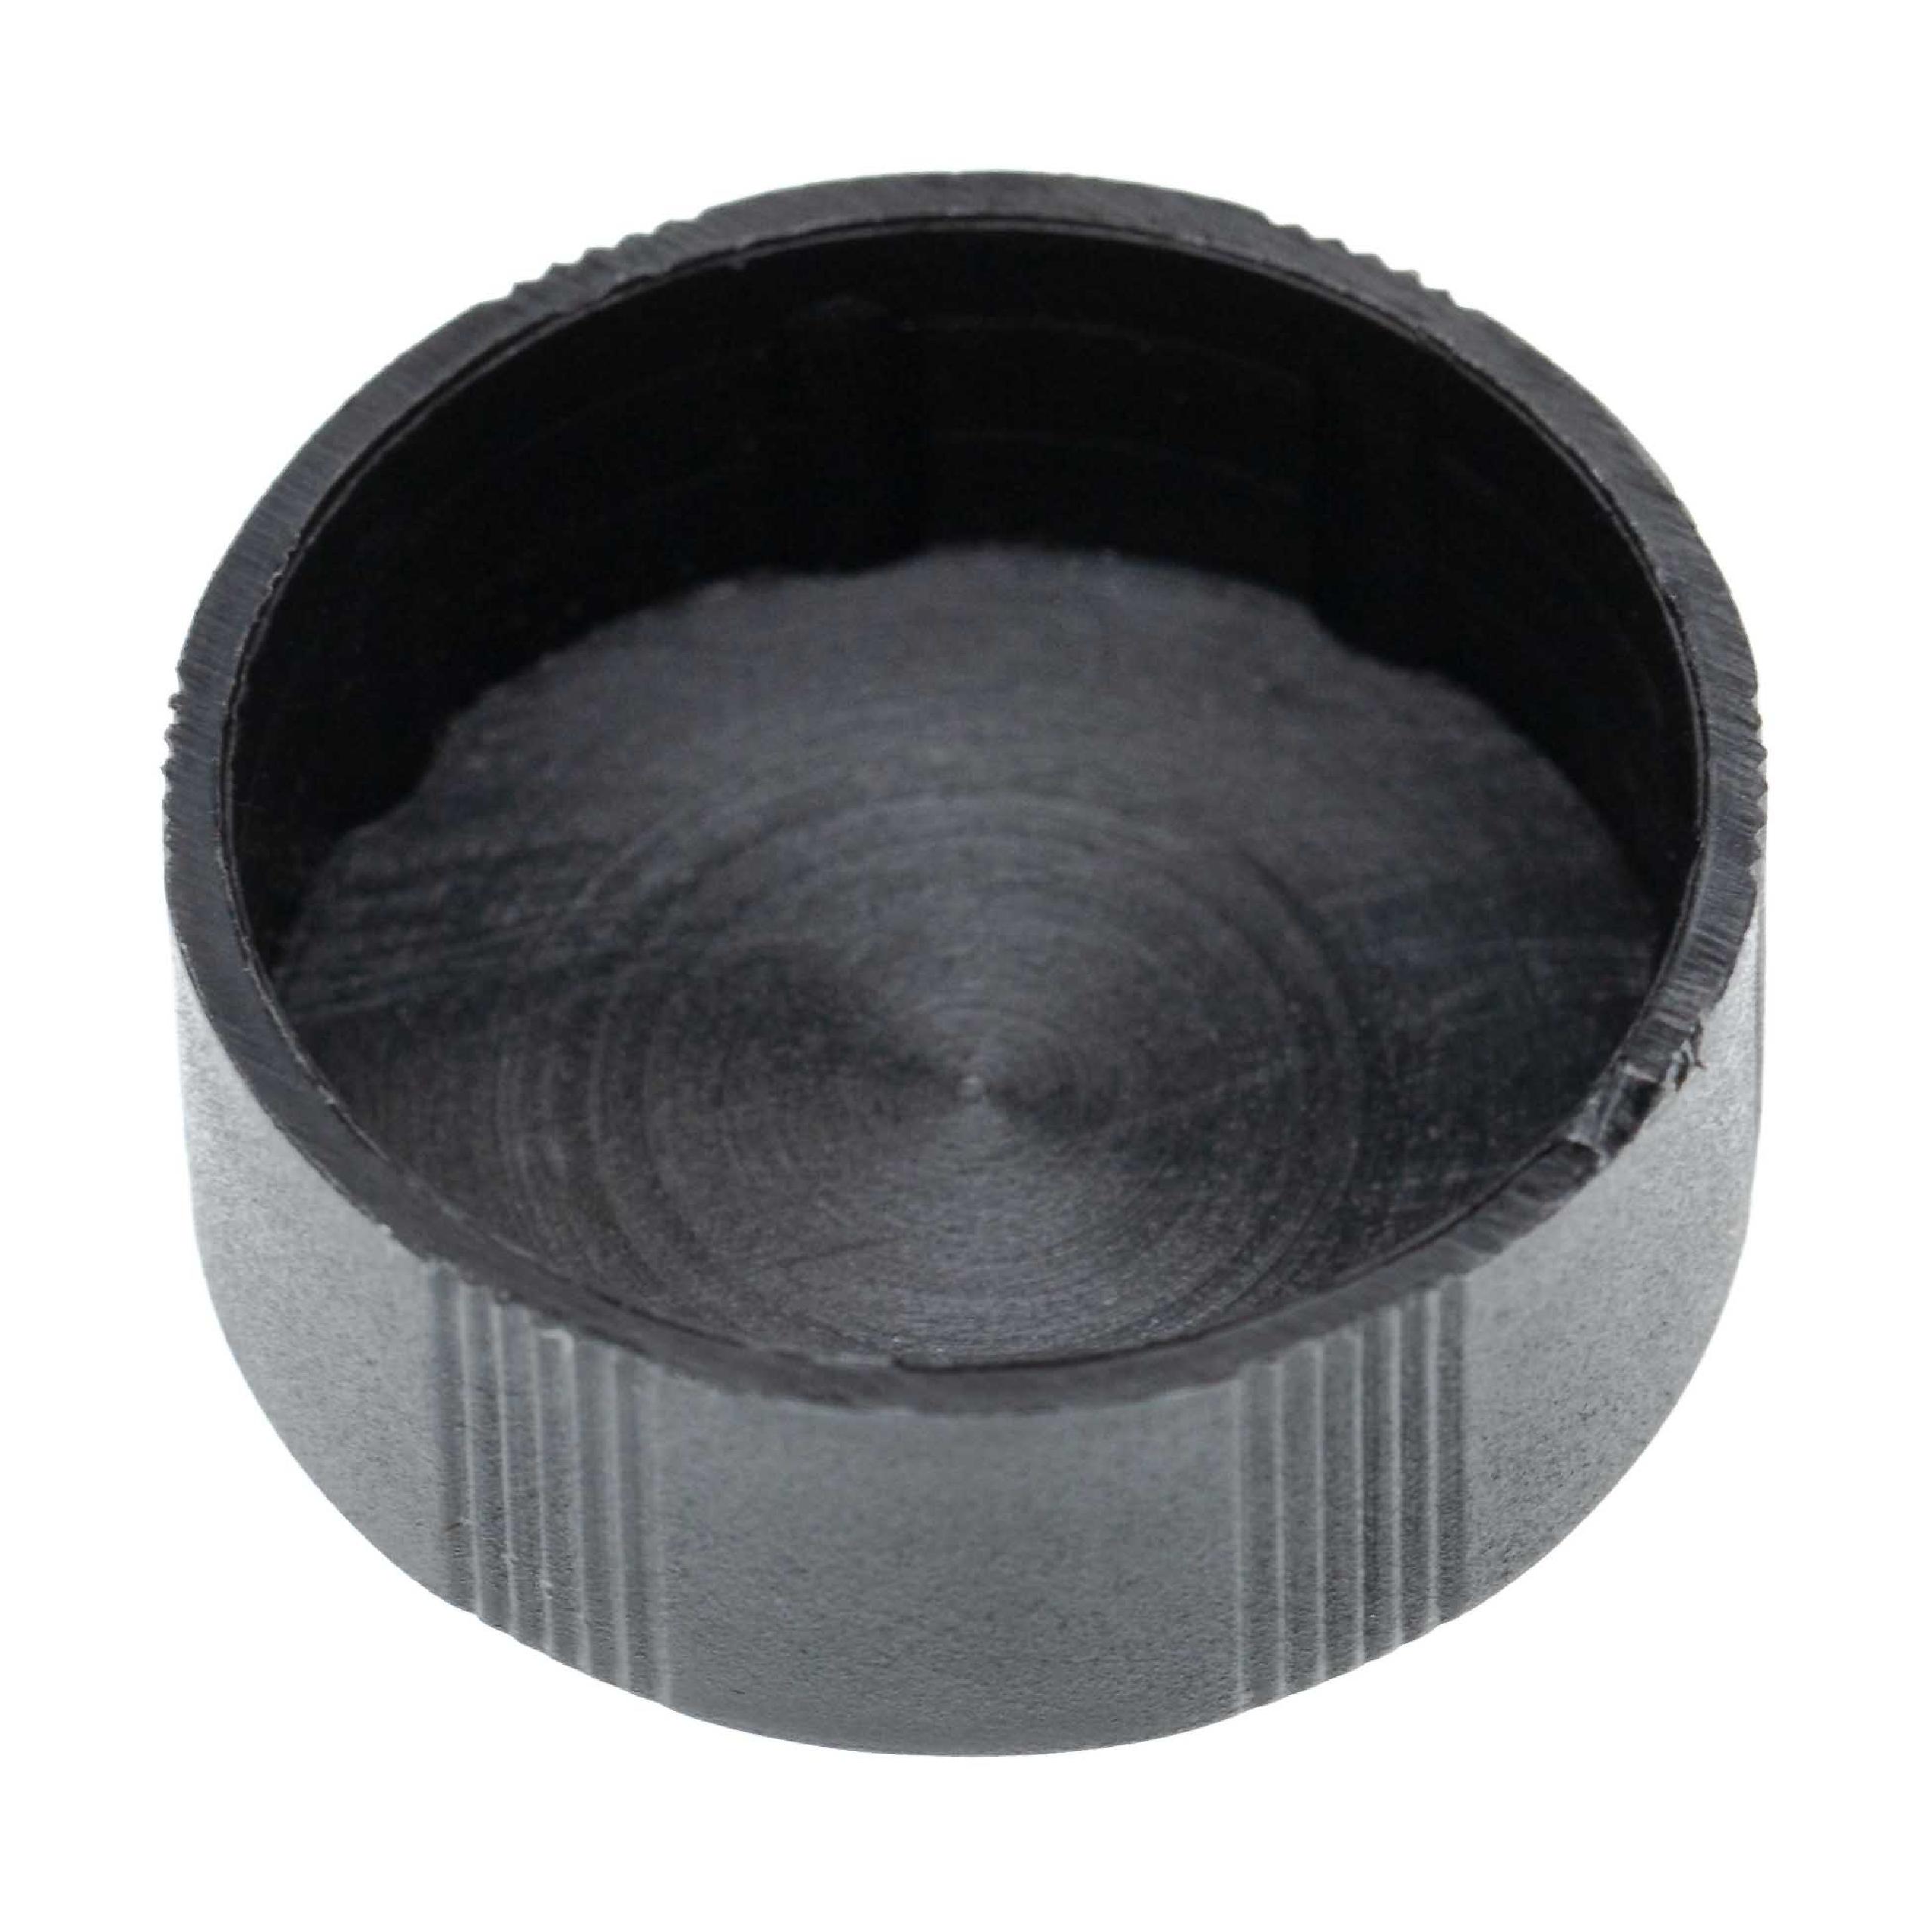 2x Lens Cap suitable for Binocular Lenses with 30 mm Diameter - Black, Detachable